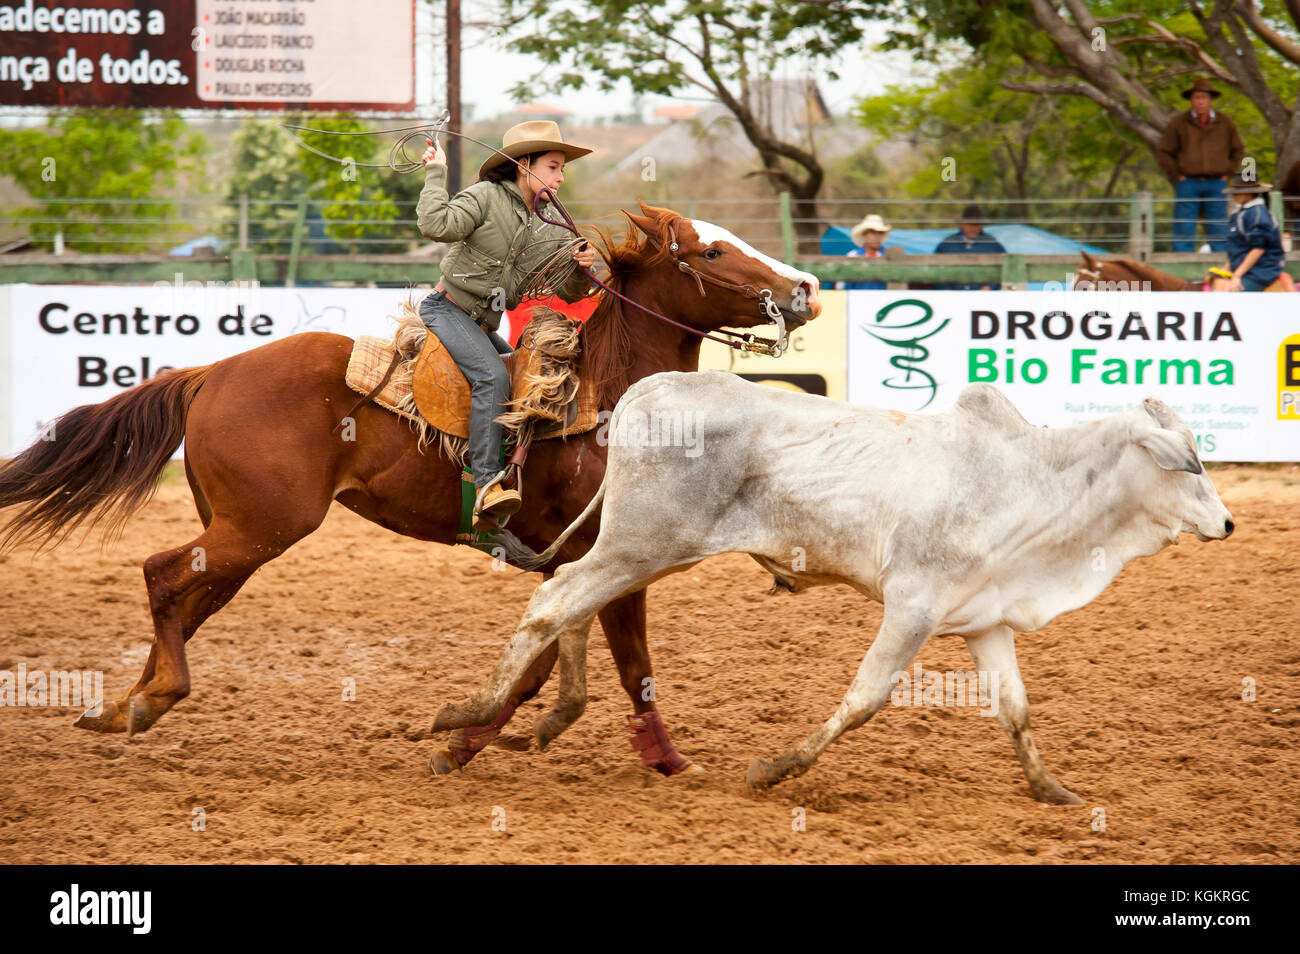 Cow woman in action in a Rodeo, a popular pastime in Mato Grosso do Sul, Bonito town, Brazi Stock Photo